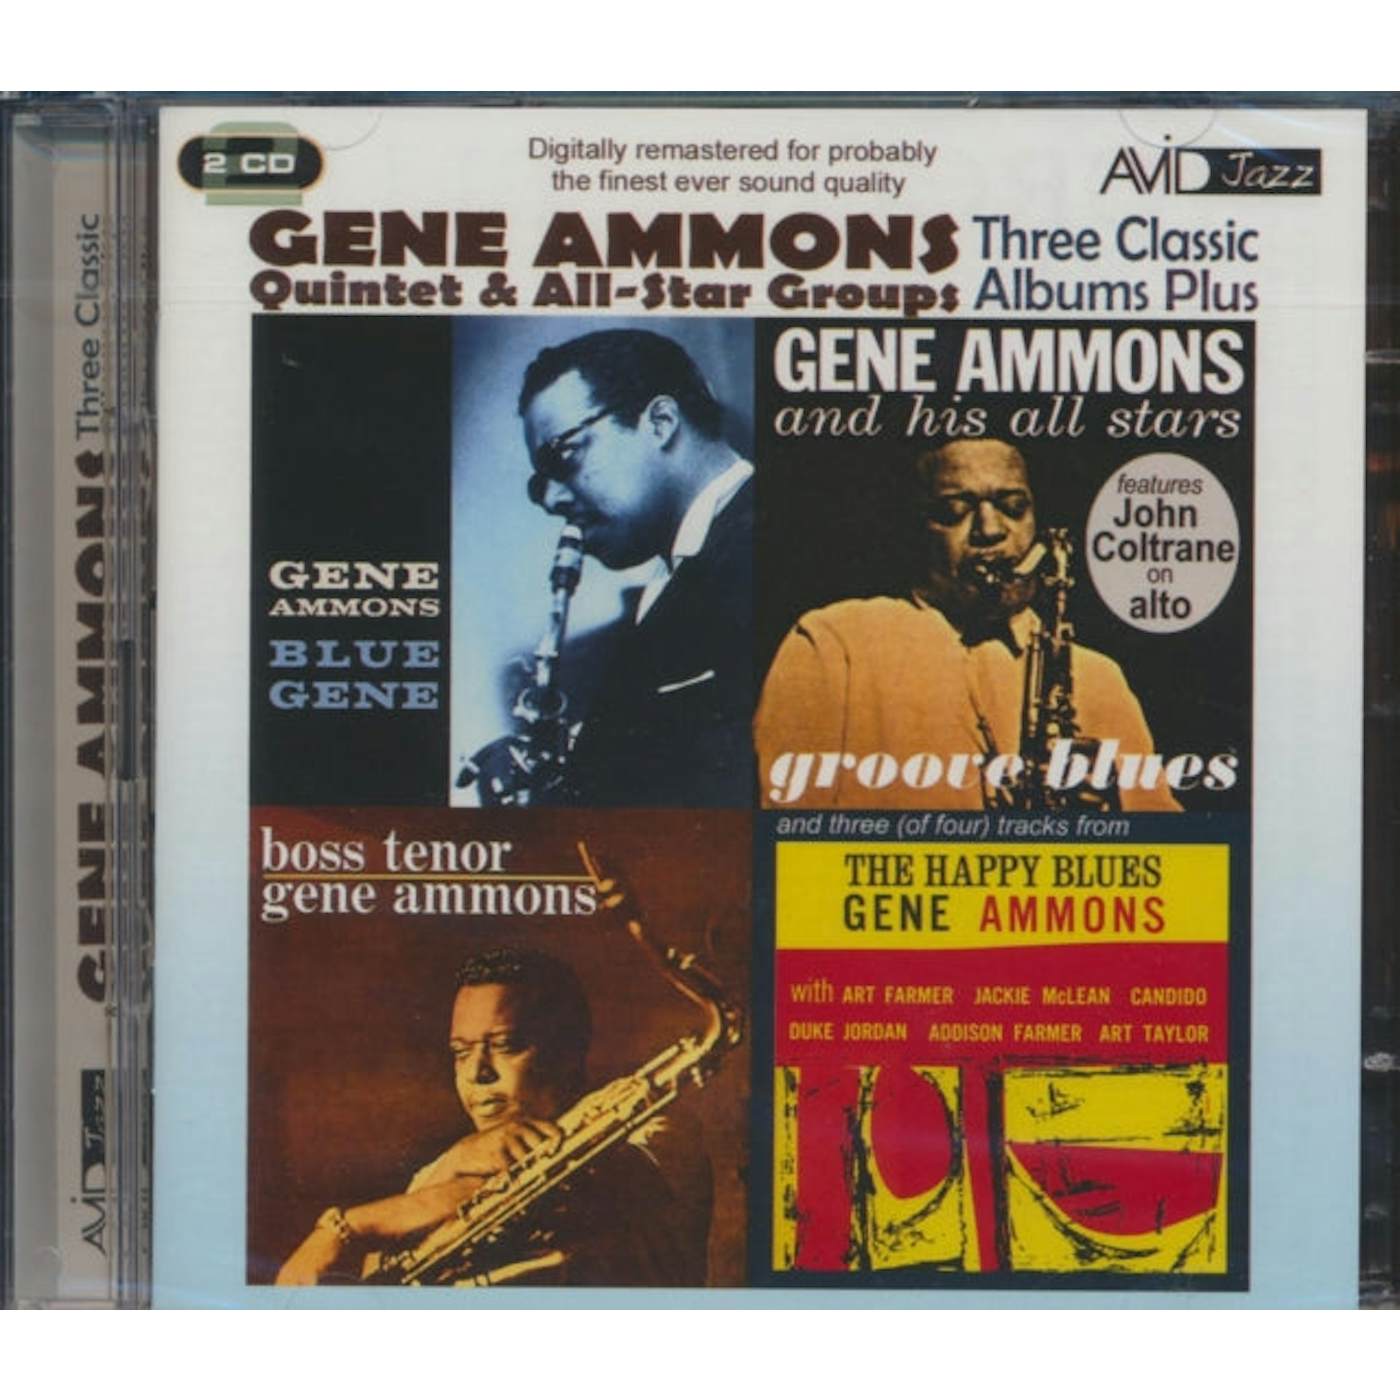 Gene Ammons CD - Three Classic Albums Plus (Groove Blues / Boss Tenor / Blue Gene)